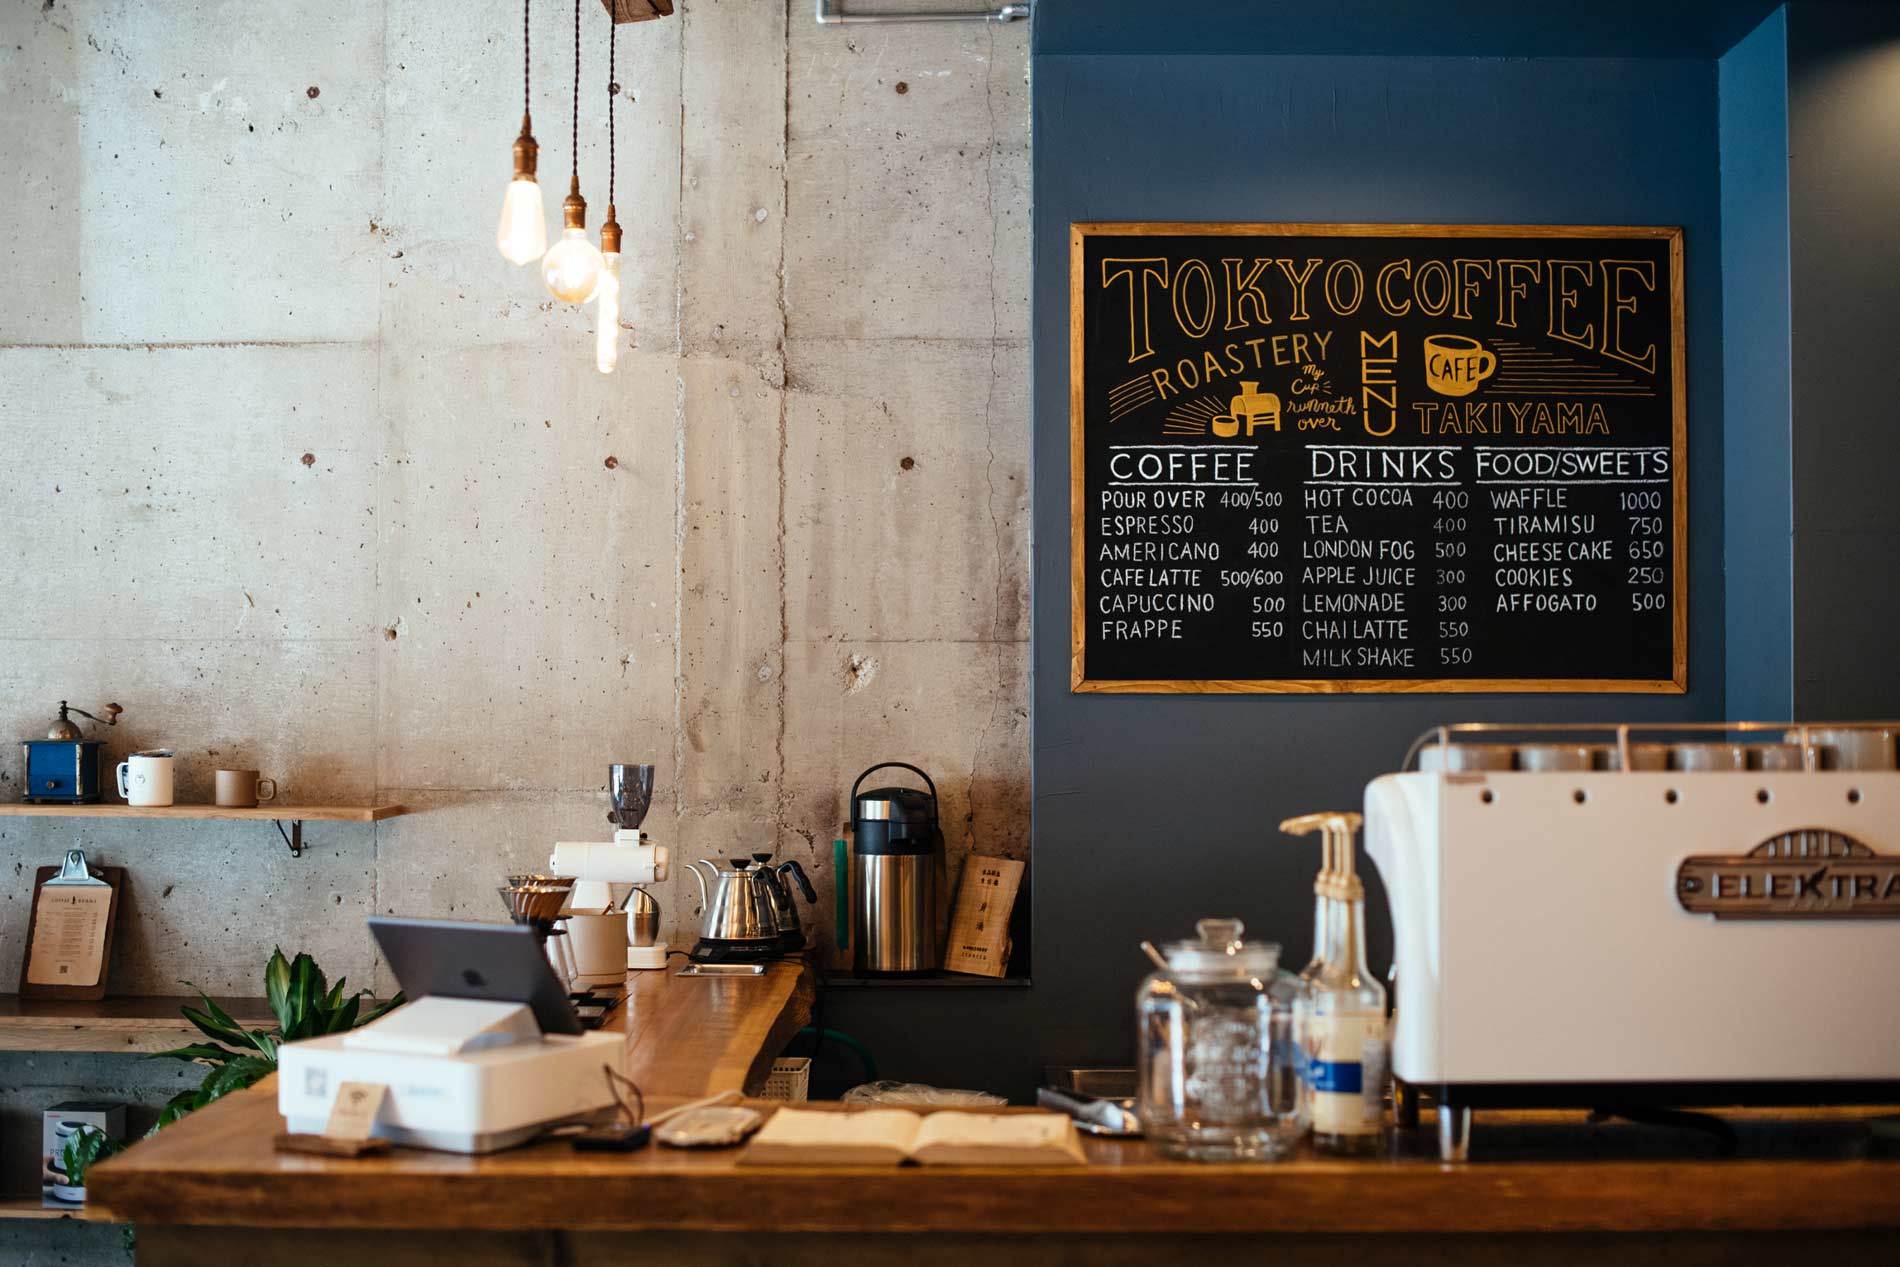 Tokyo Coffee Cafe Counter and Espresso Machine - 東京コーヒーカフェの画像